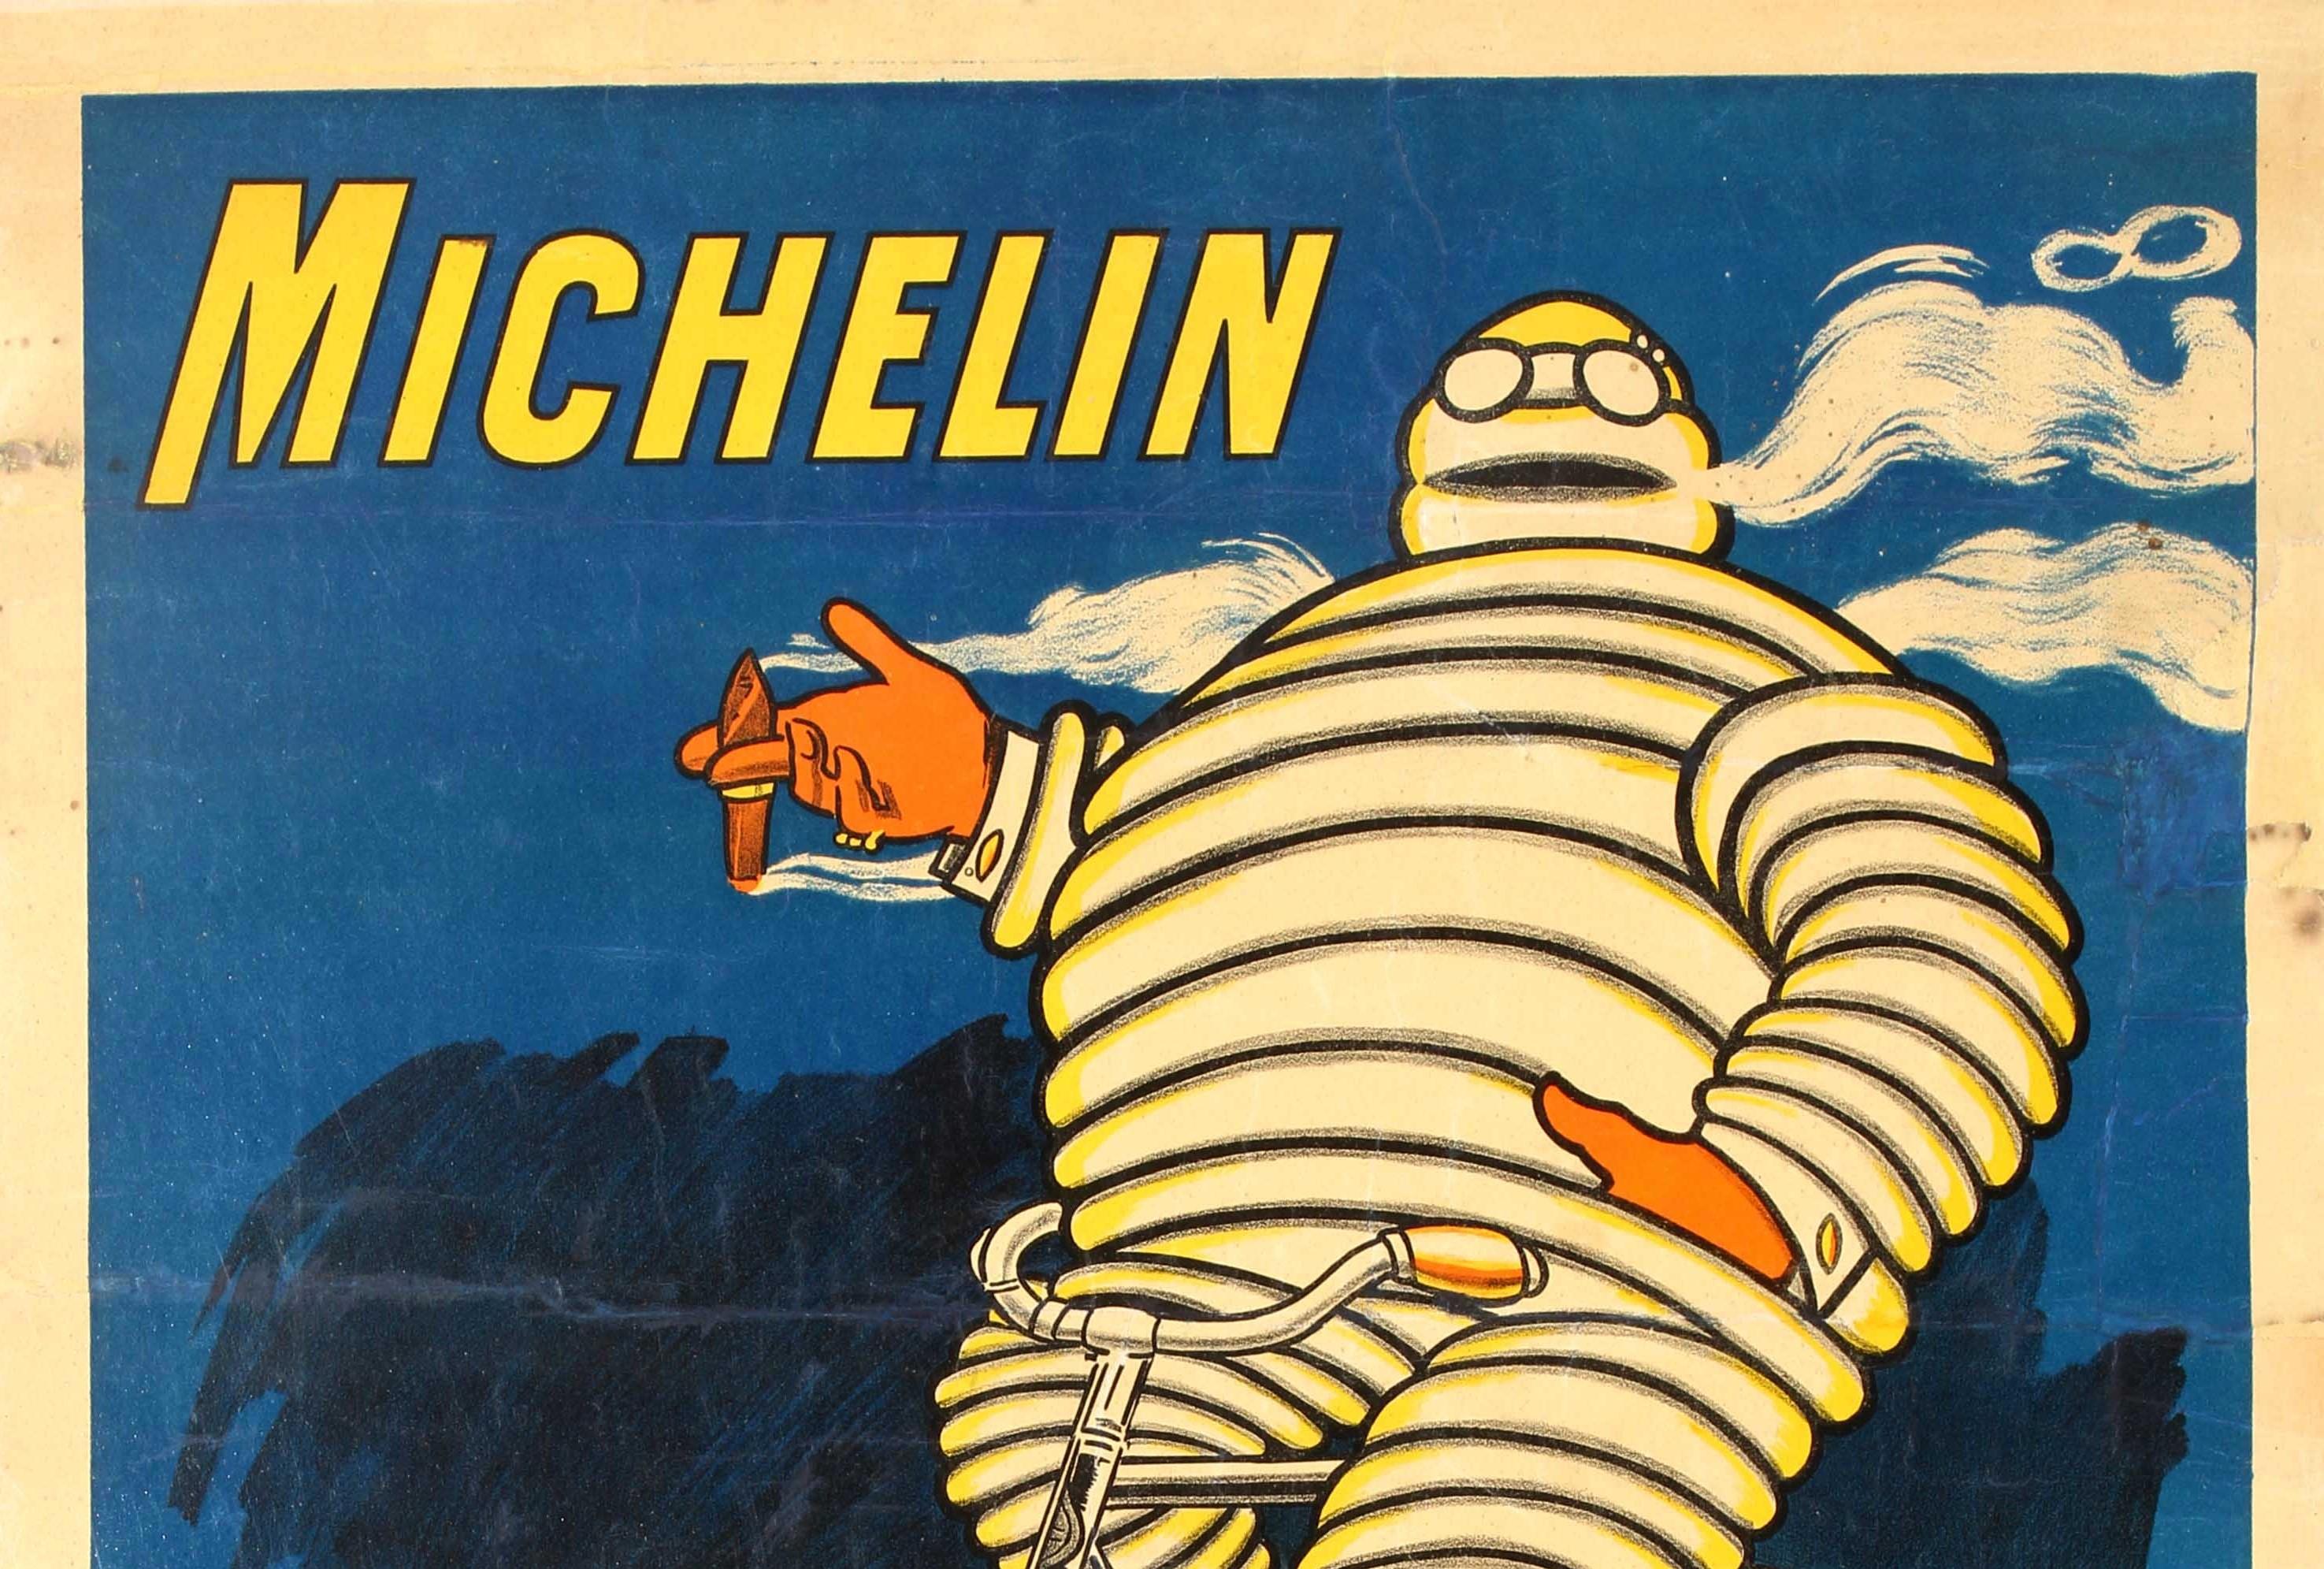 Original Antique Bibendum Michelin Man Poster - Michelin Pneu Velo Bicycle Tyres - Print by Unknown